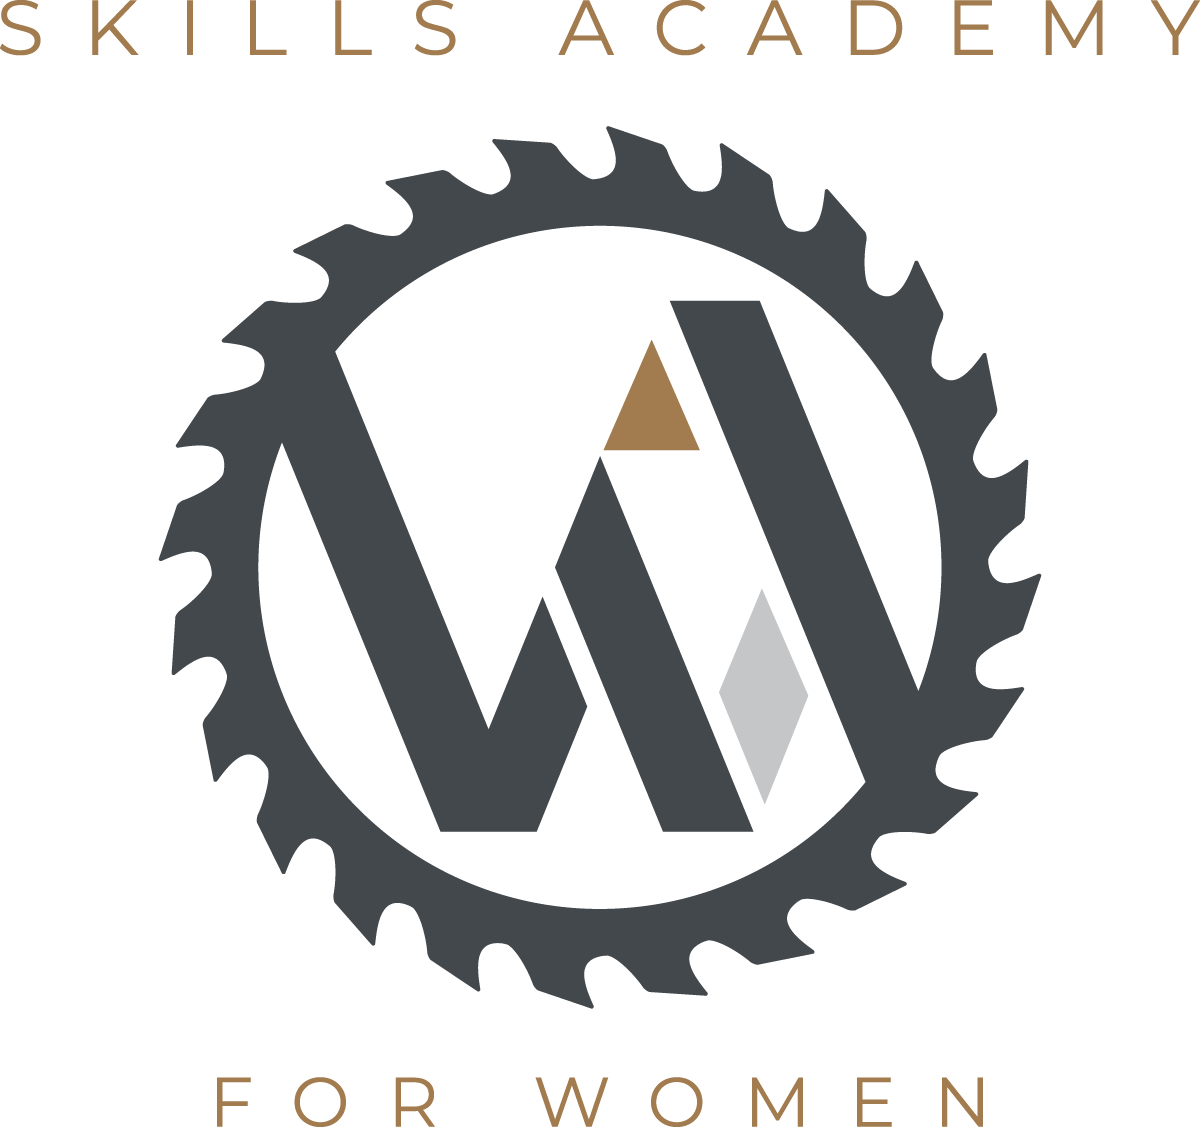 Skills Academy for Women